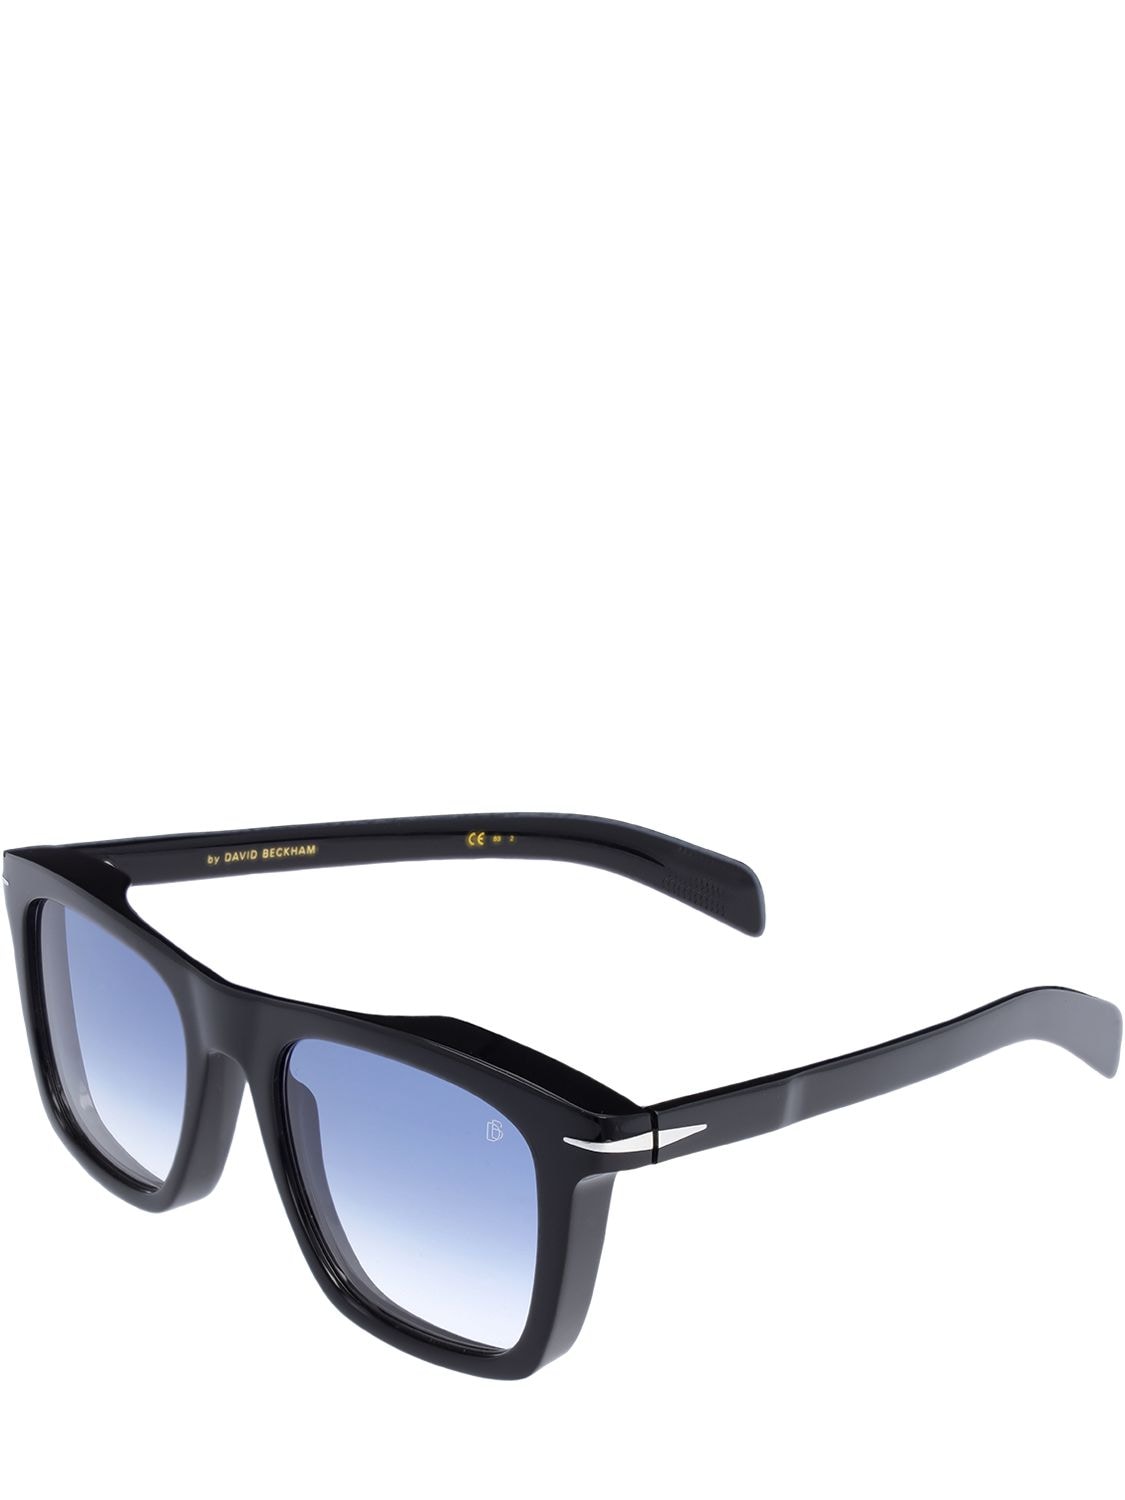 Shop Db Eyewear By David Beckham Db Squared Acetate Sunglasses In Black,blue